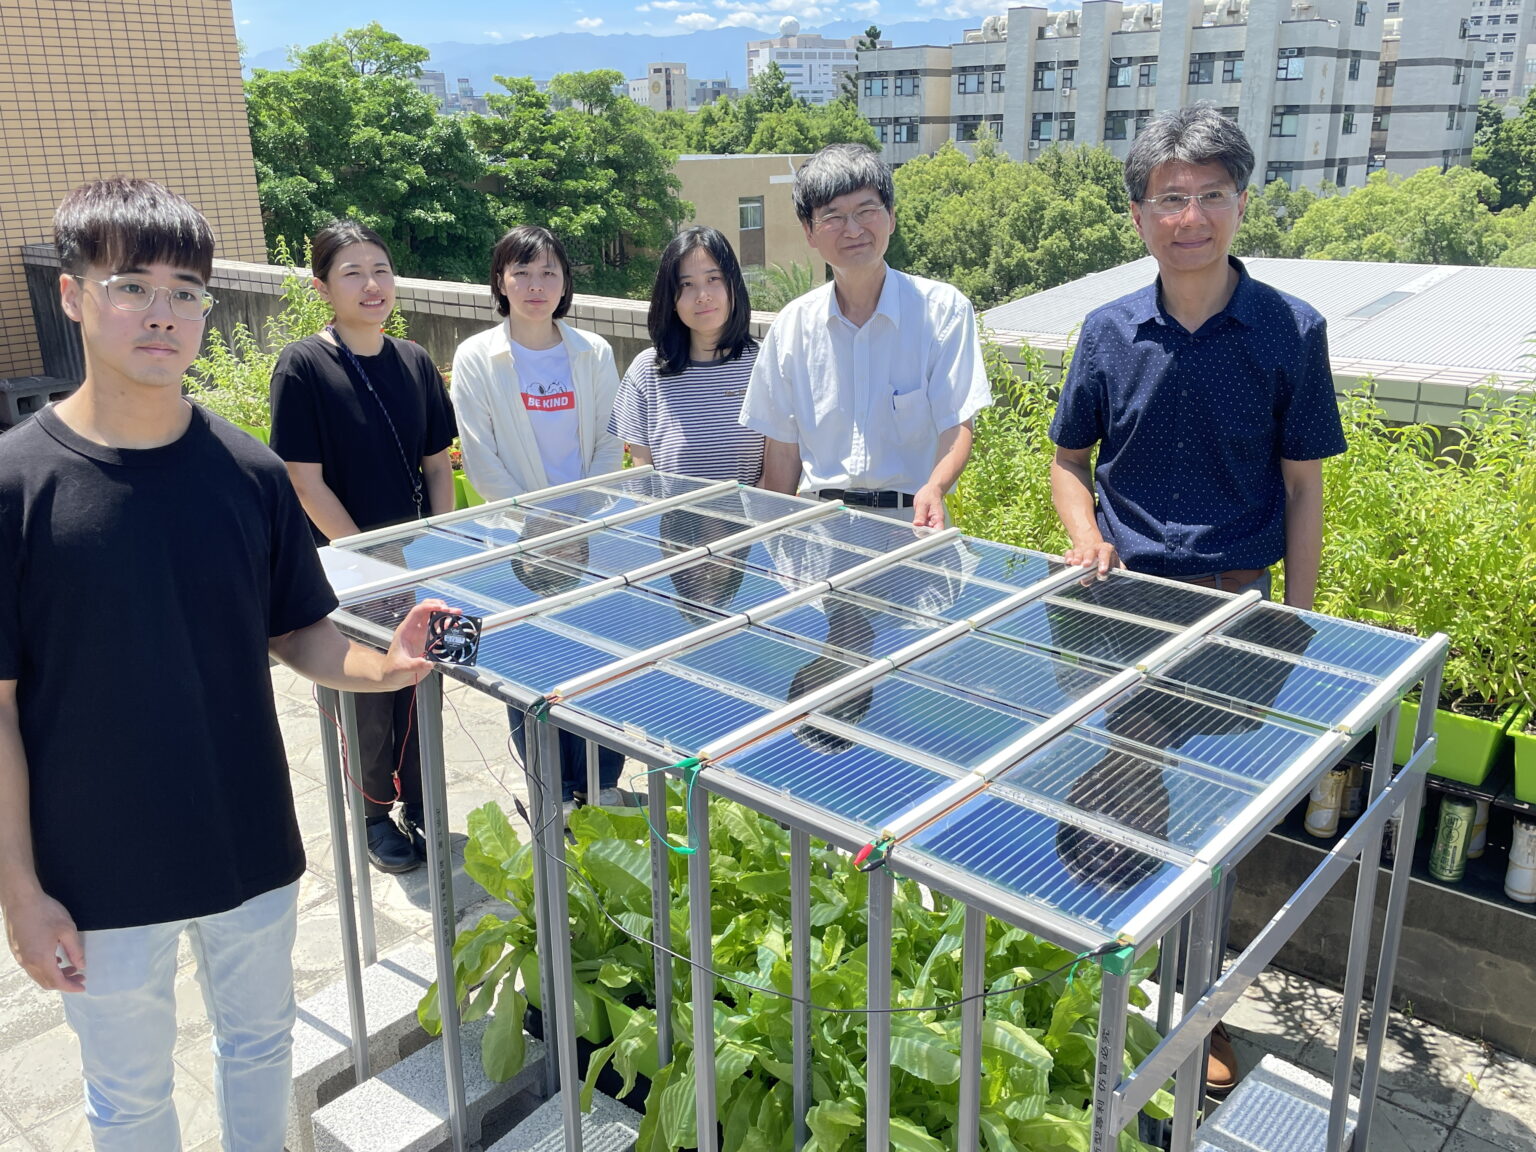 DIYGreen rooftop combines garden with solar panel to create an efficient rooftop